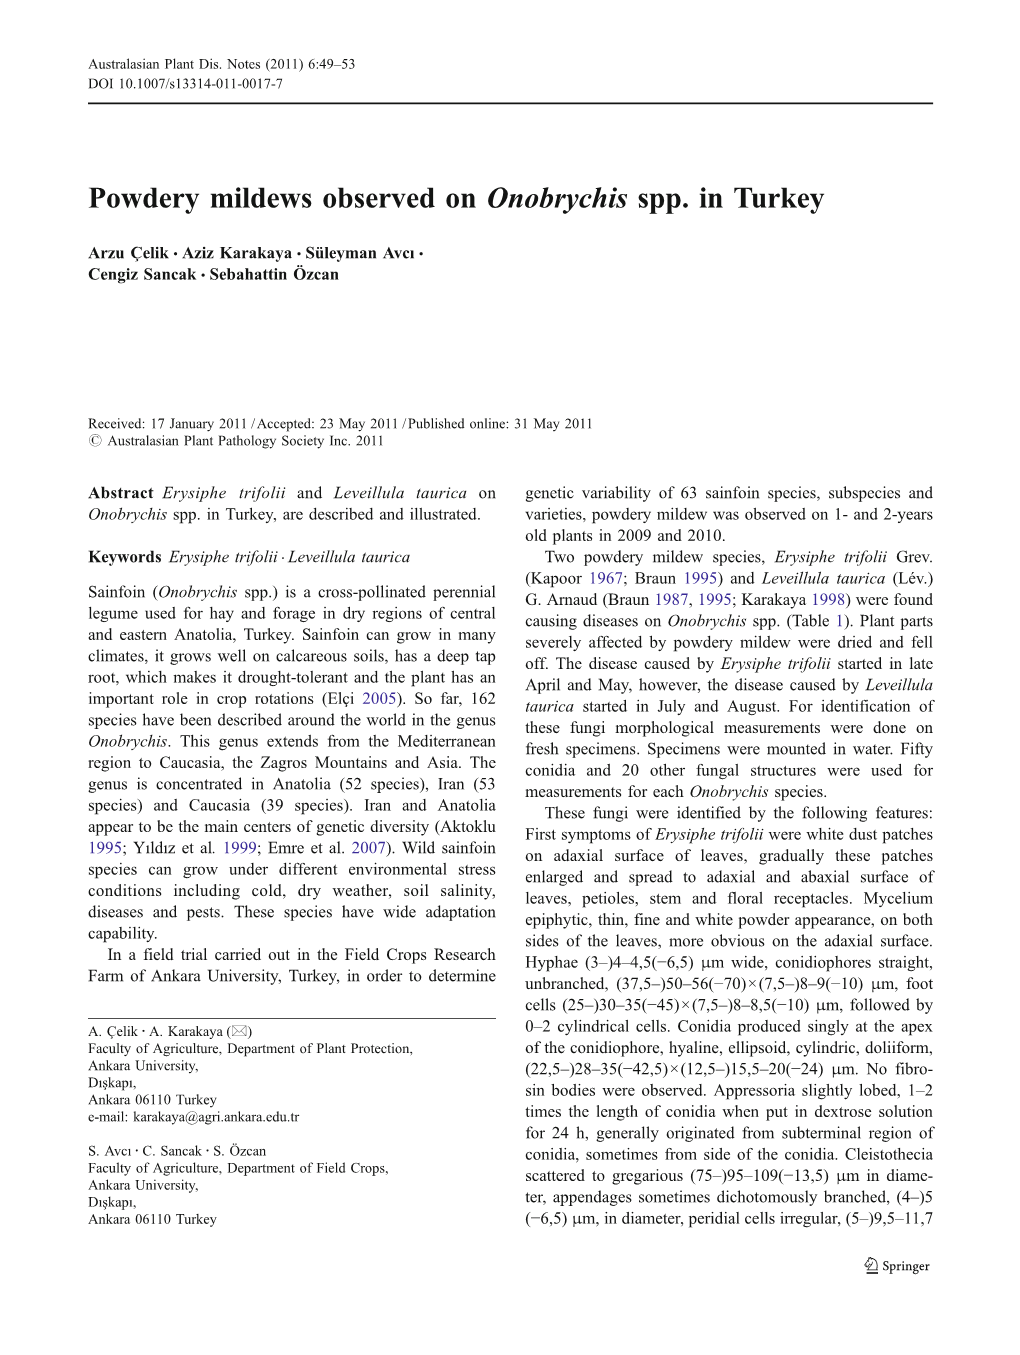 Powdery Mildews Observed on Onobrychis Spp. in Turkey